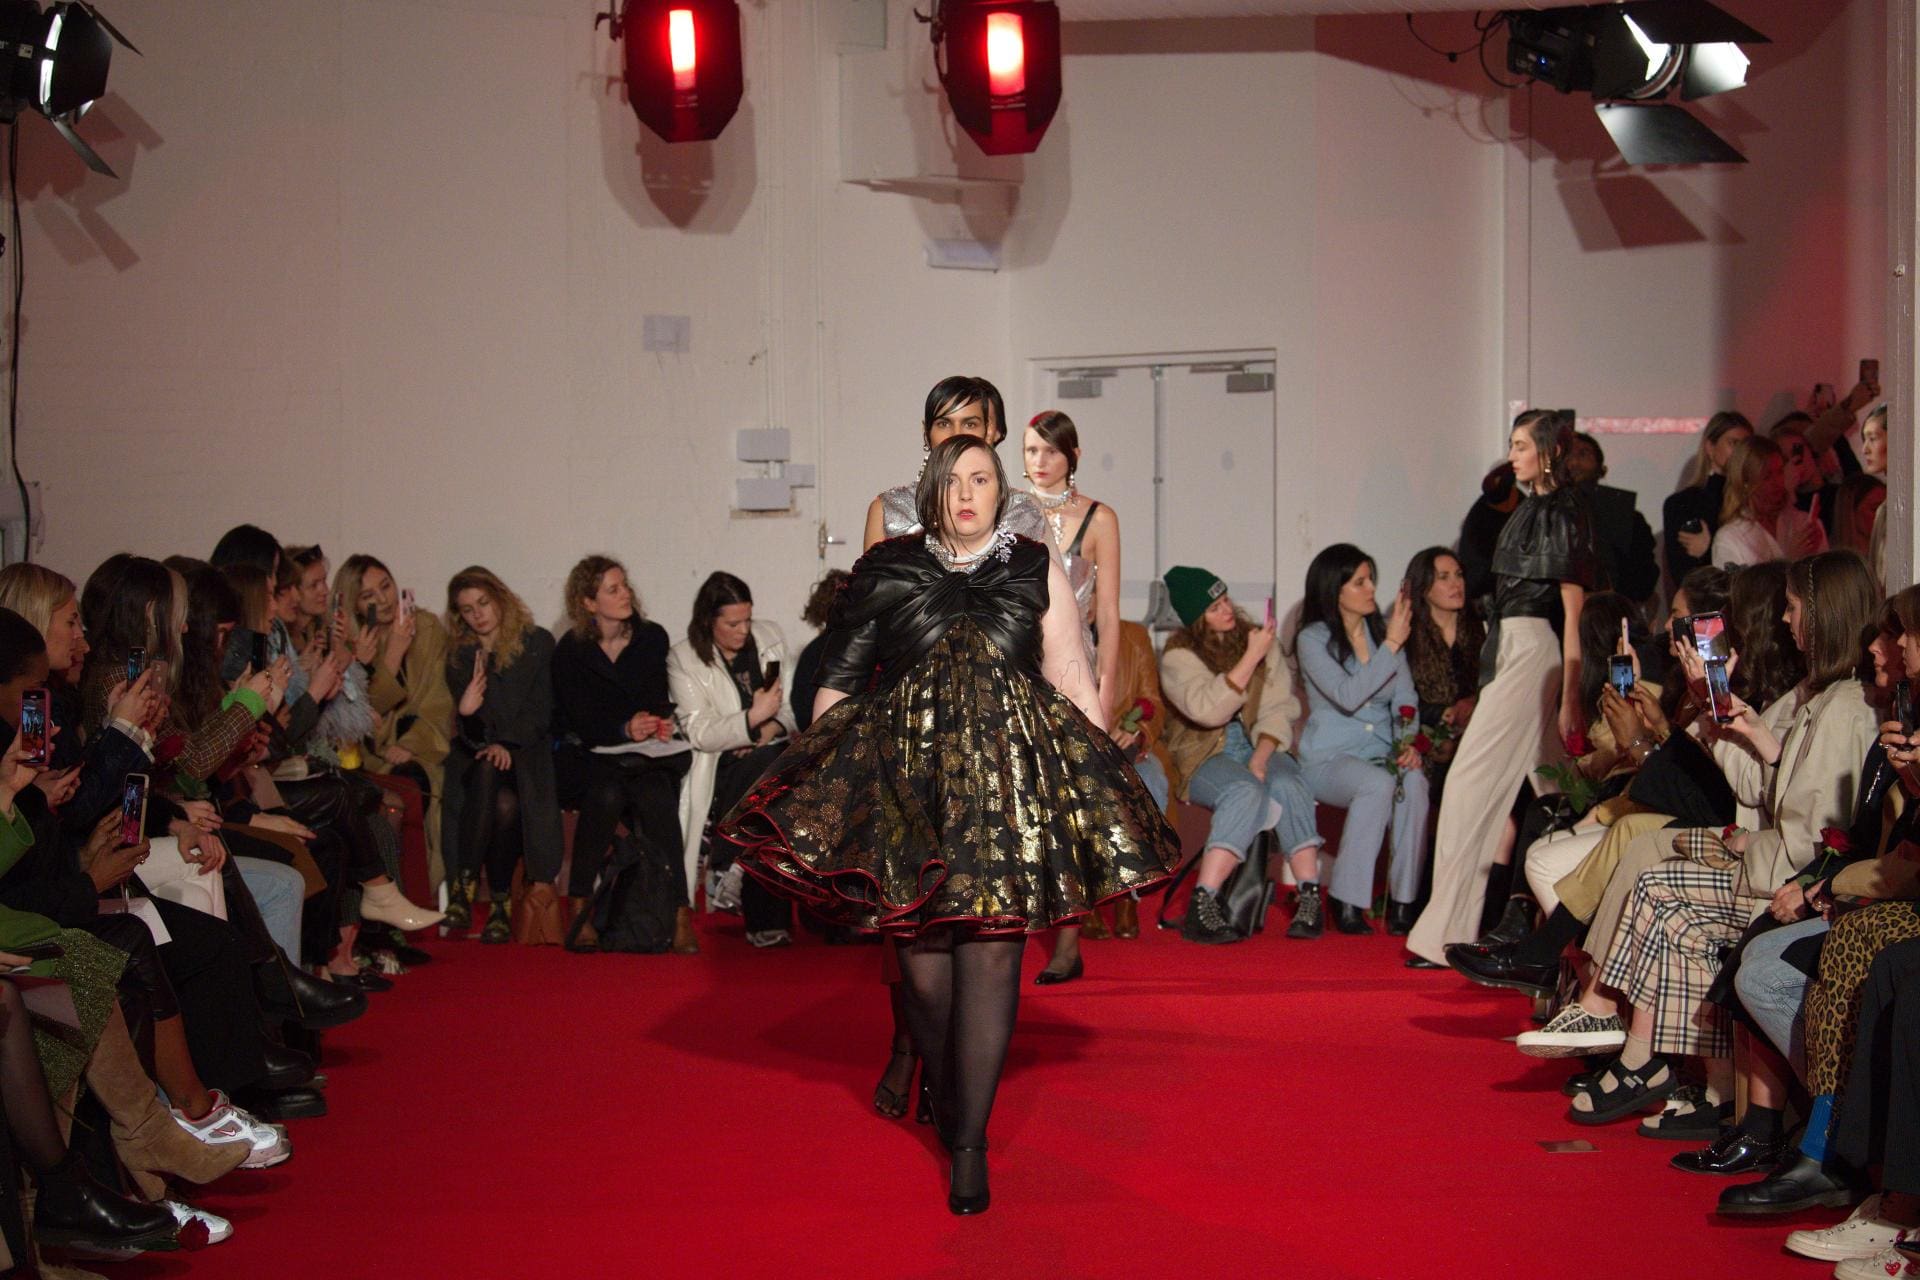 Anya Hindmarch Makes 'No Plastic' Statement During London Fashion Week – WWD